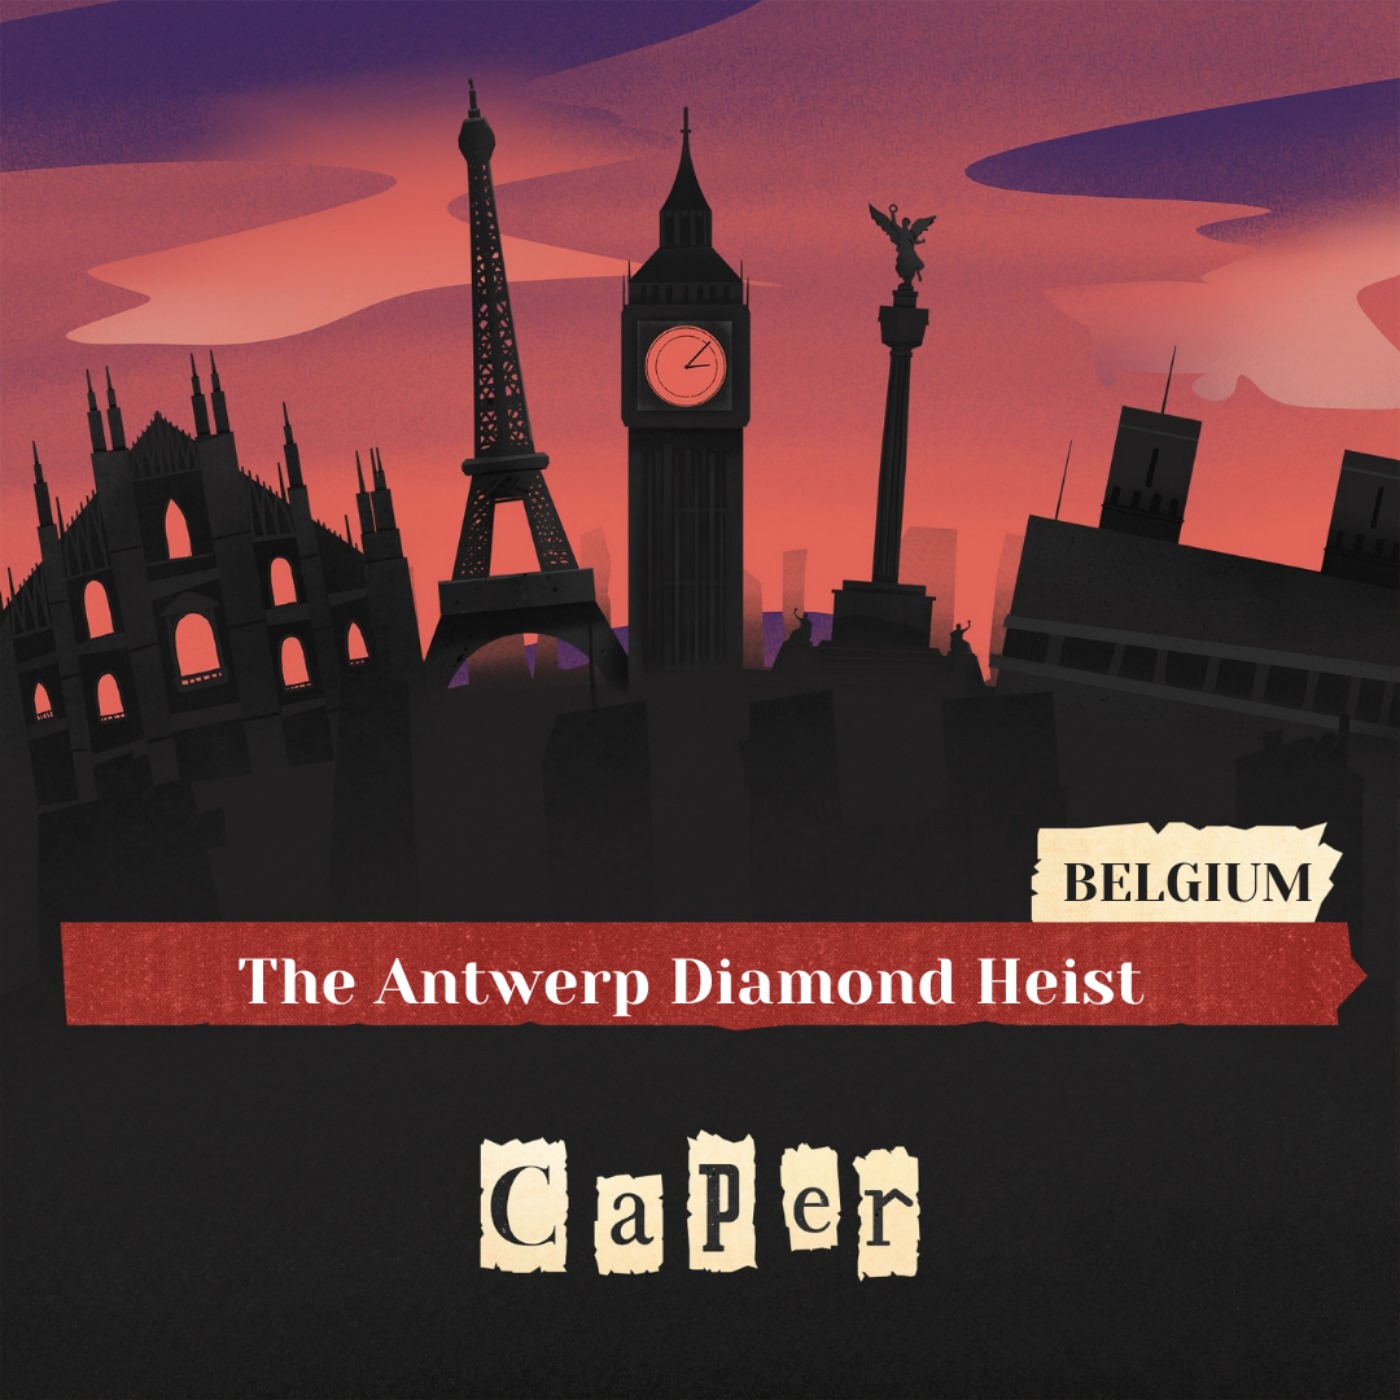 The Antwerp Diamond Heist